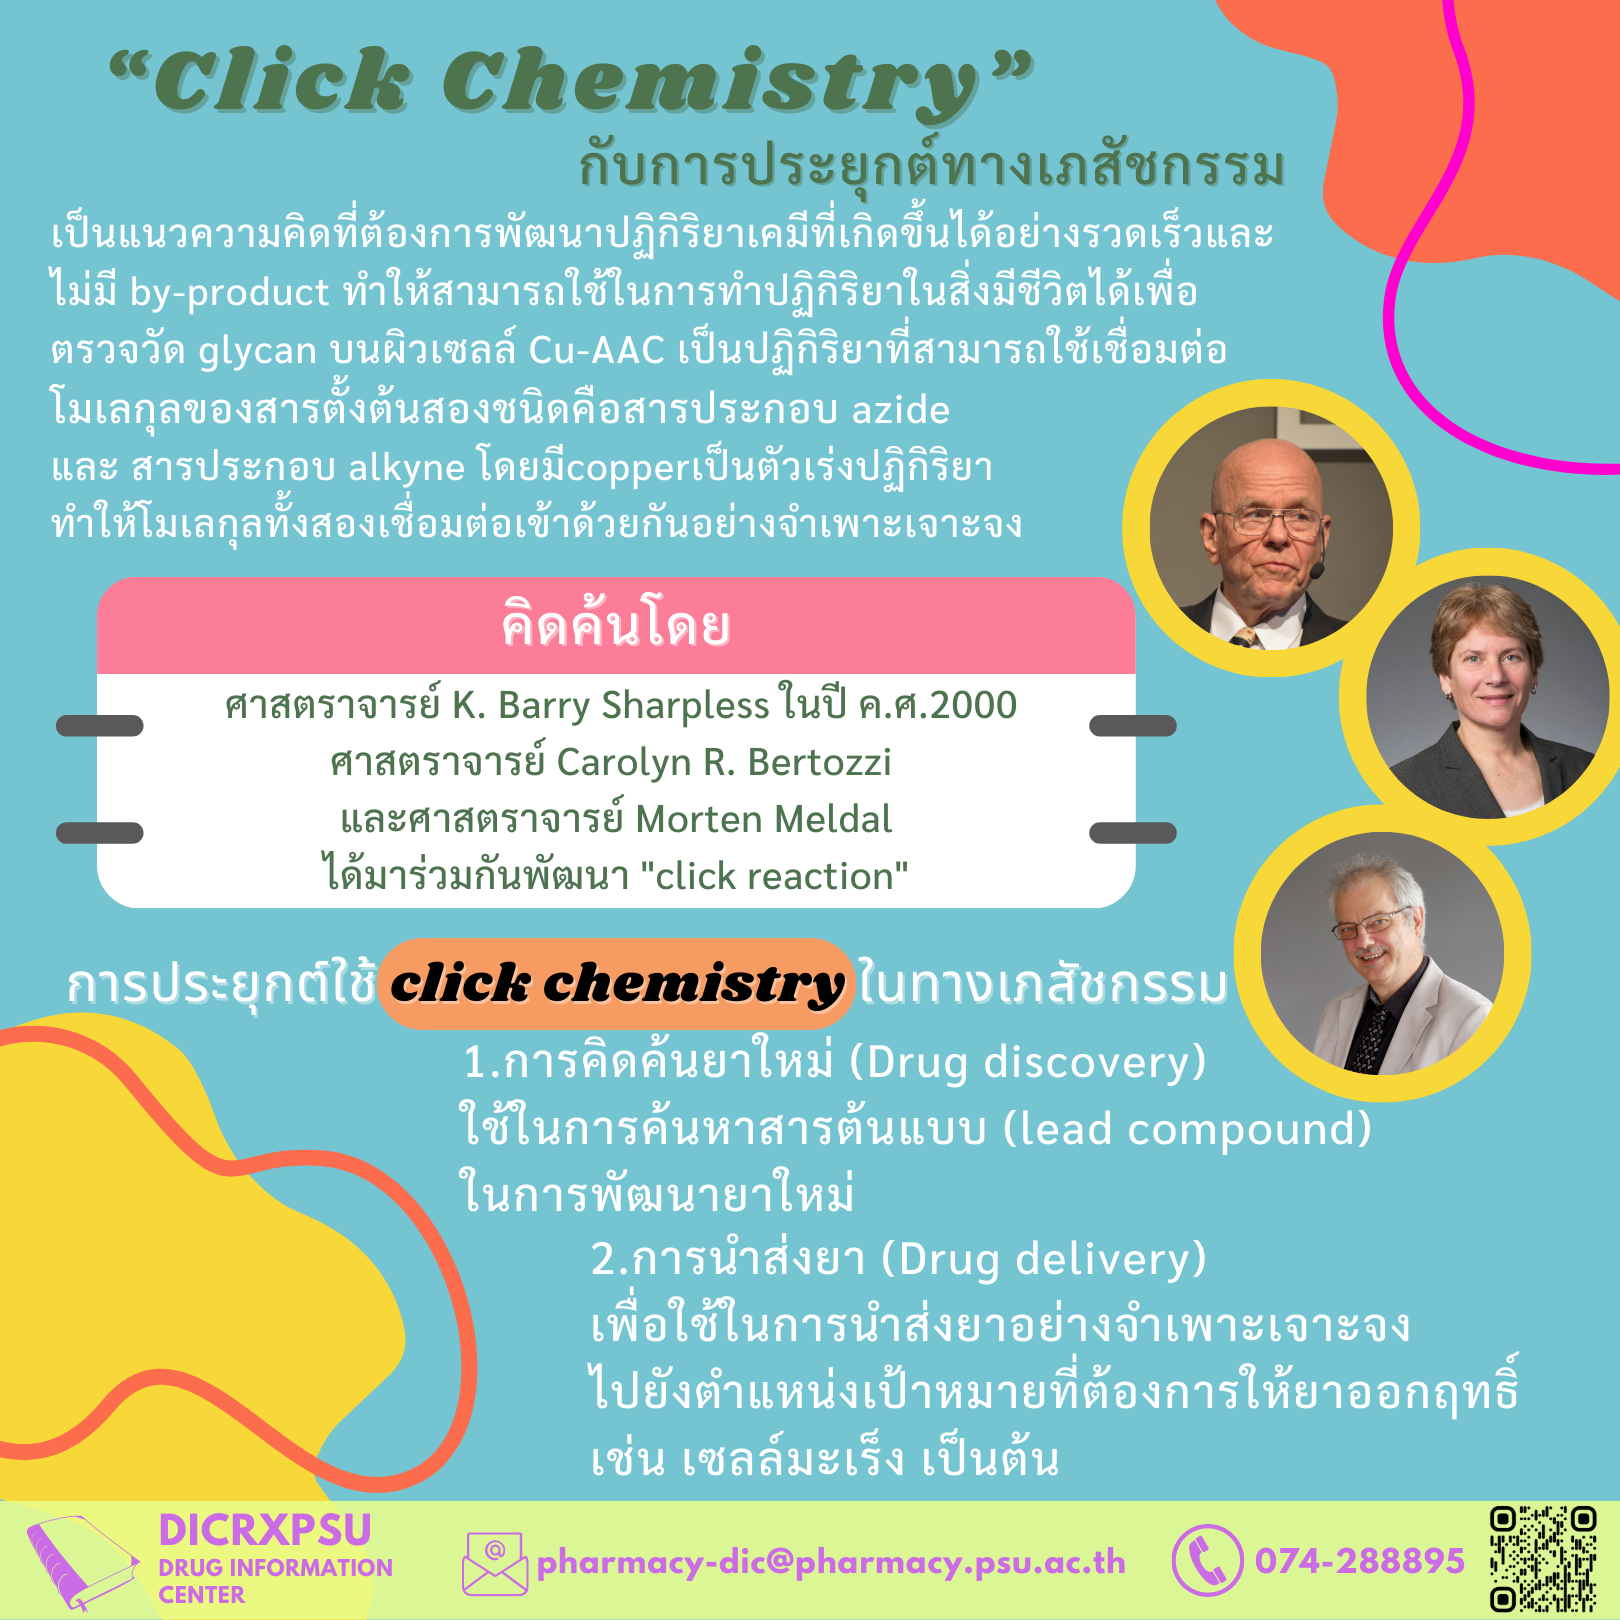 Click Chemistry